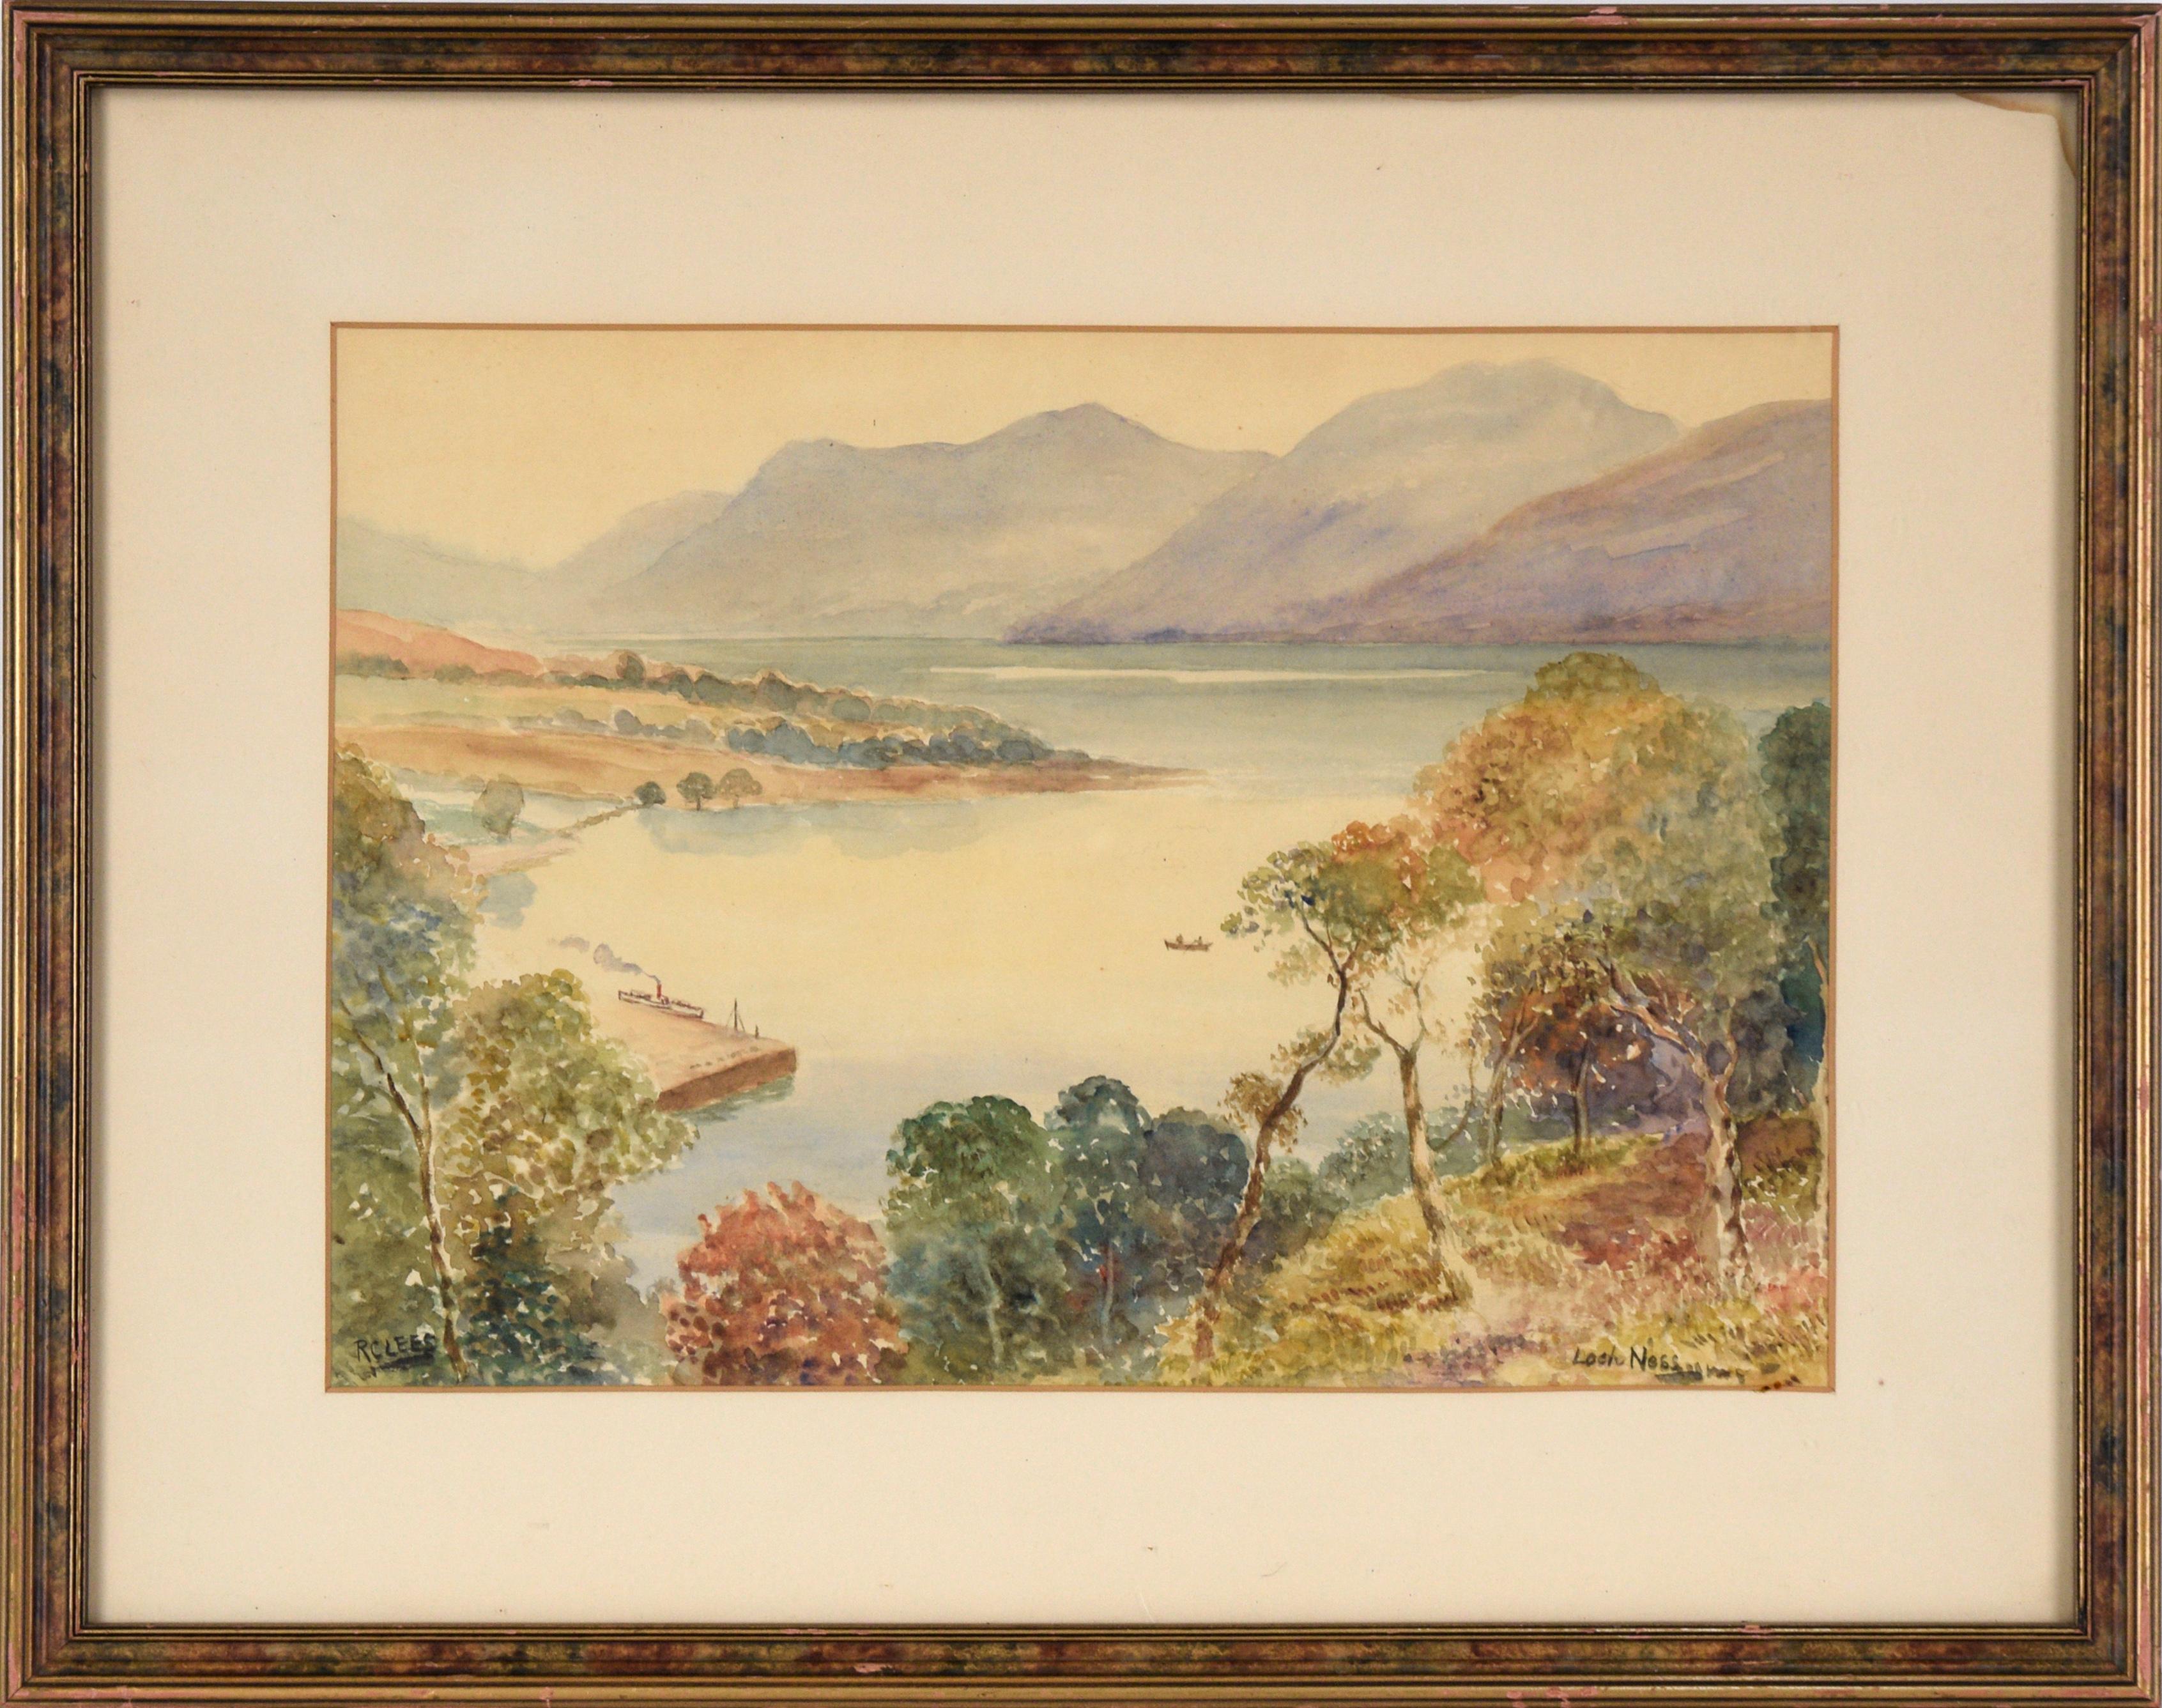 R. C. Lees Landscape Art - "Lock Ness" Lake Watercolor Landscape on Paper